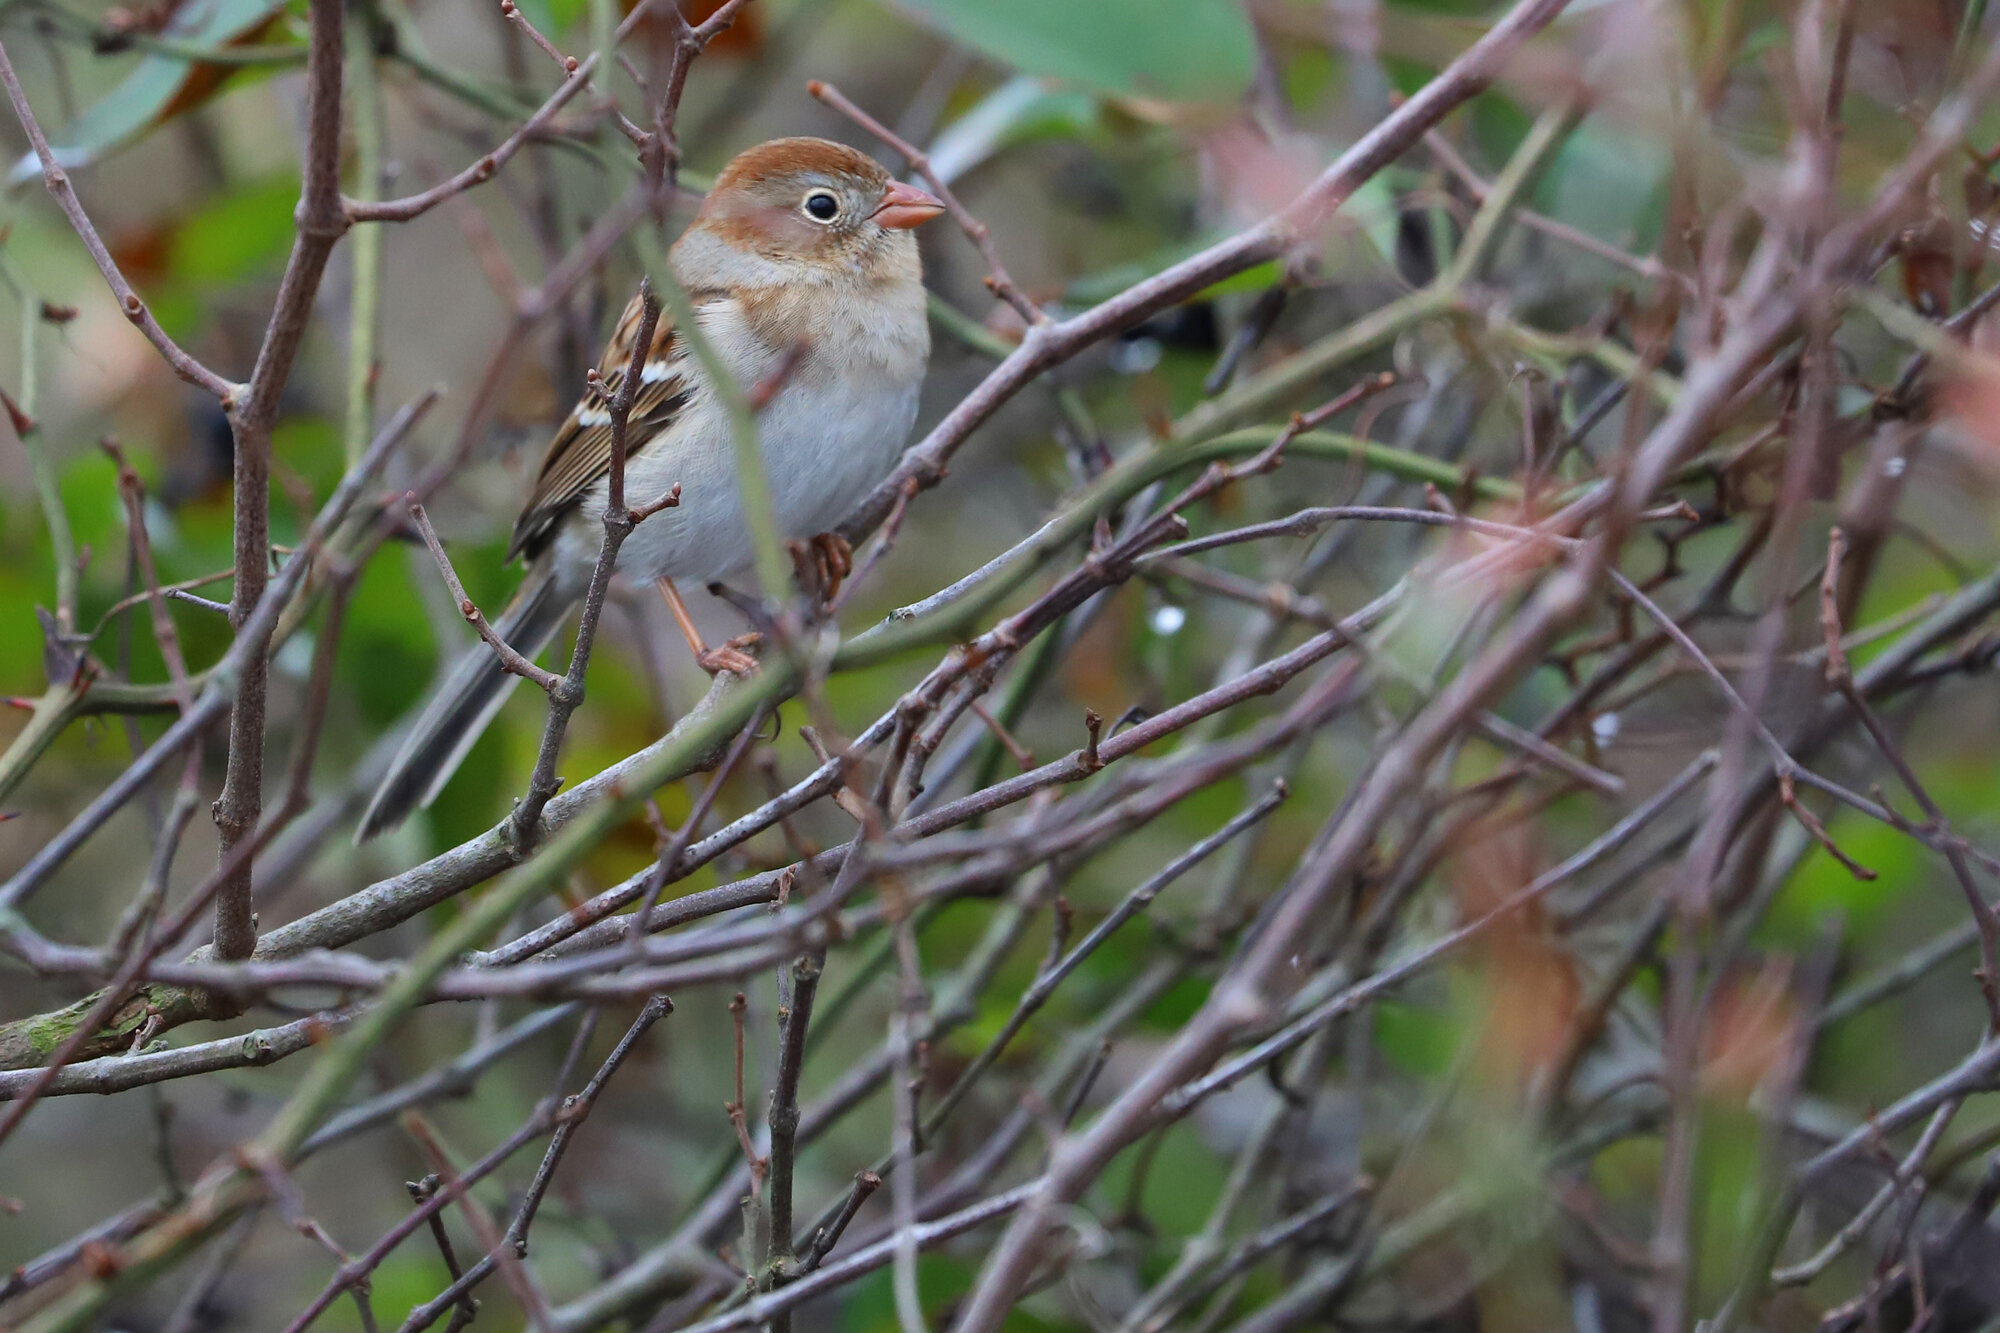  Field Sparrow / Little Island Park / 14 Dec 